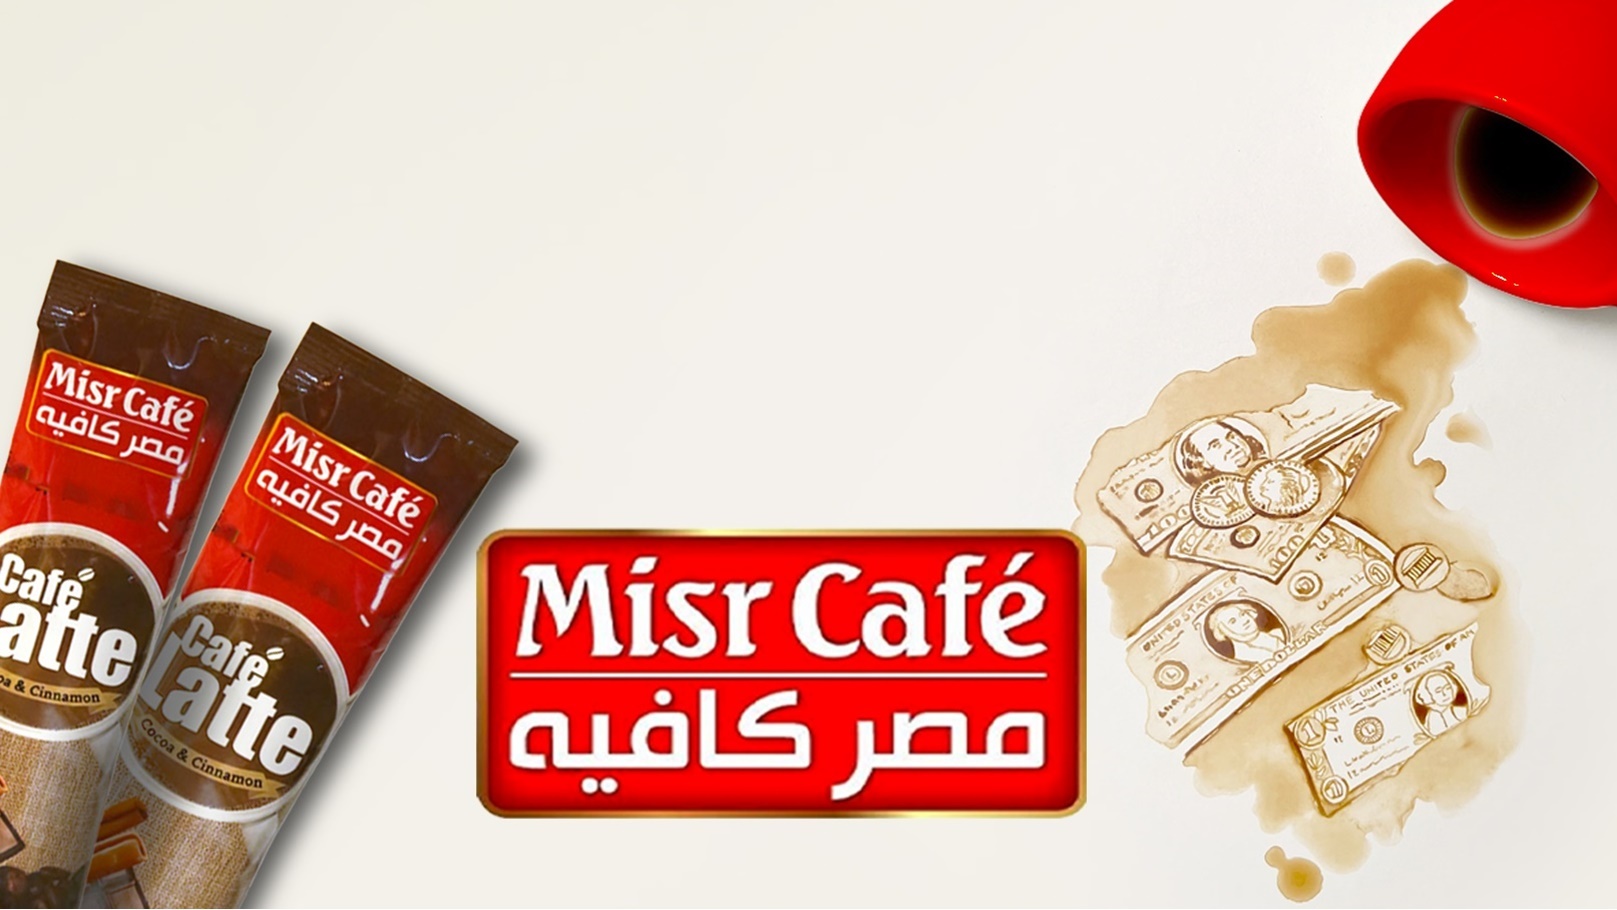 Misr Cafe 2